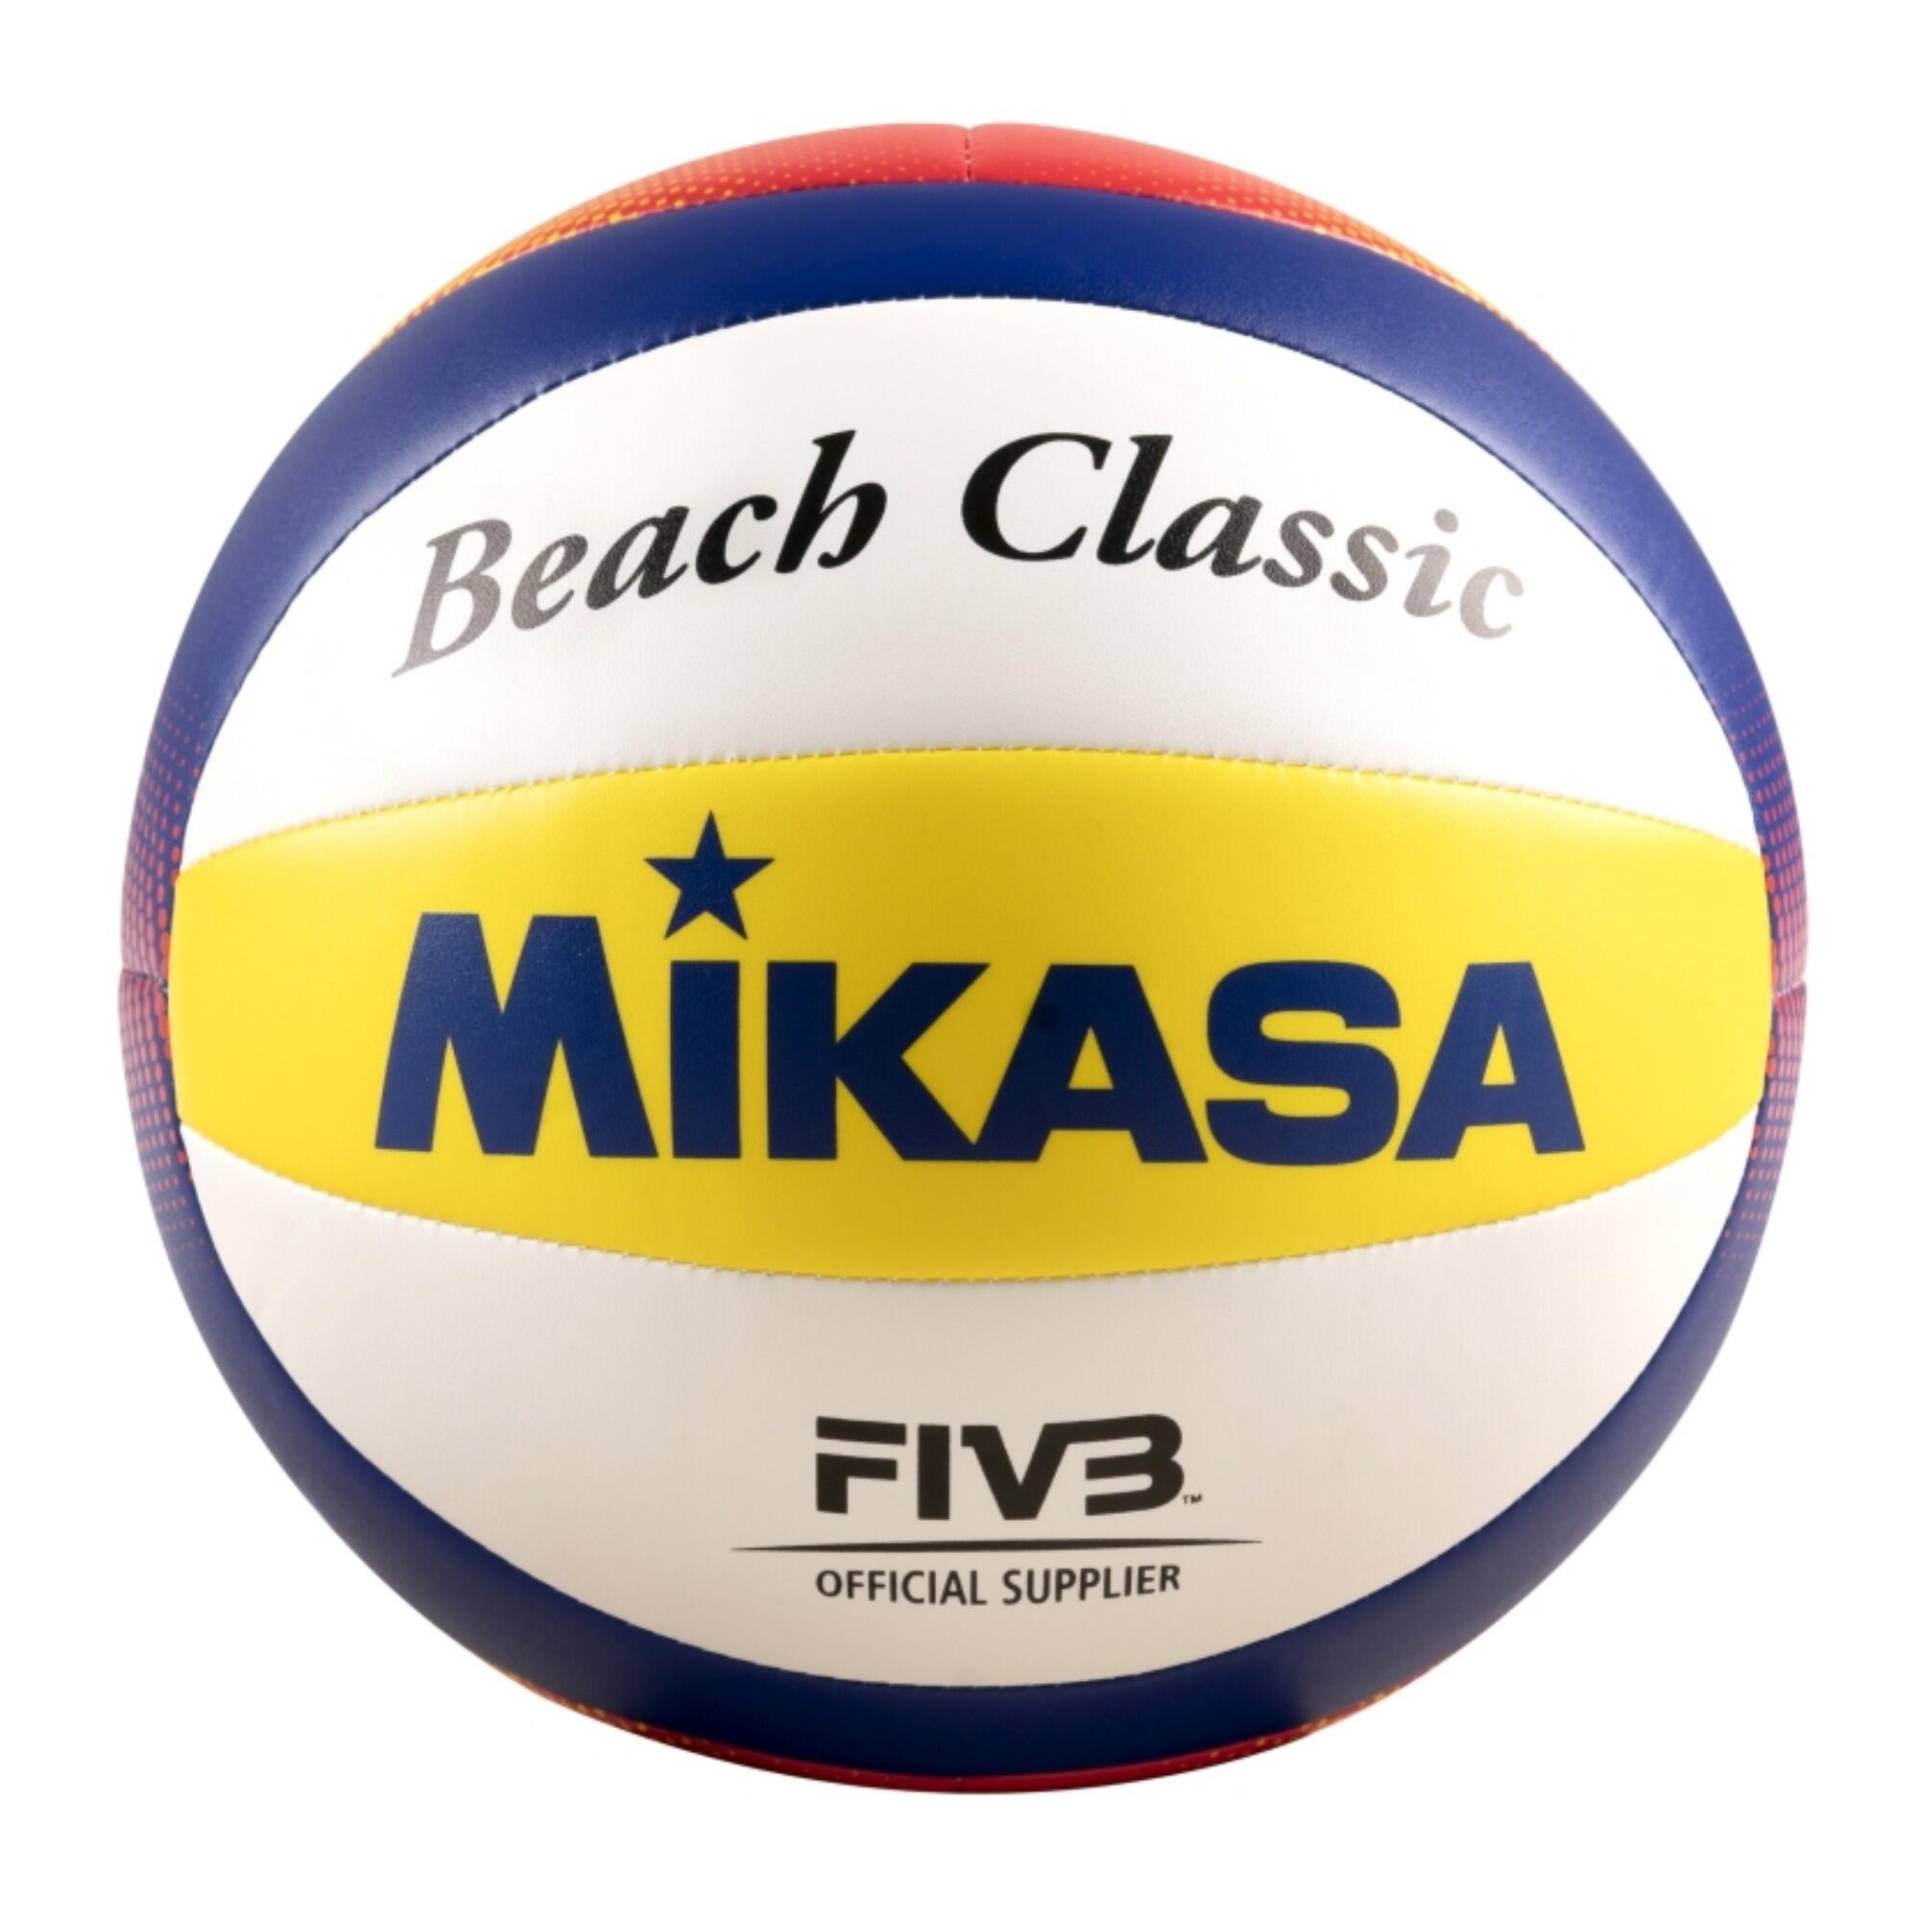 Beachvolleyball Grösse 5 - Mikasa Beach Classic BV552C von Mikasa